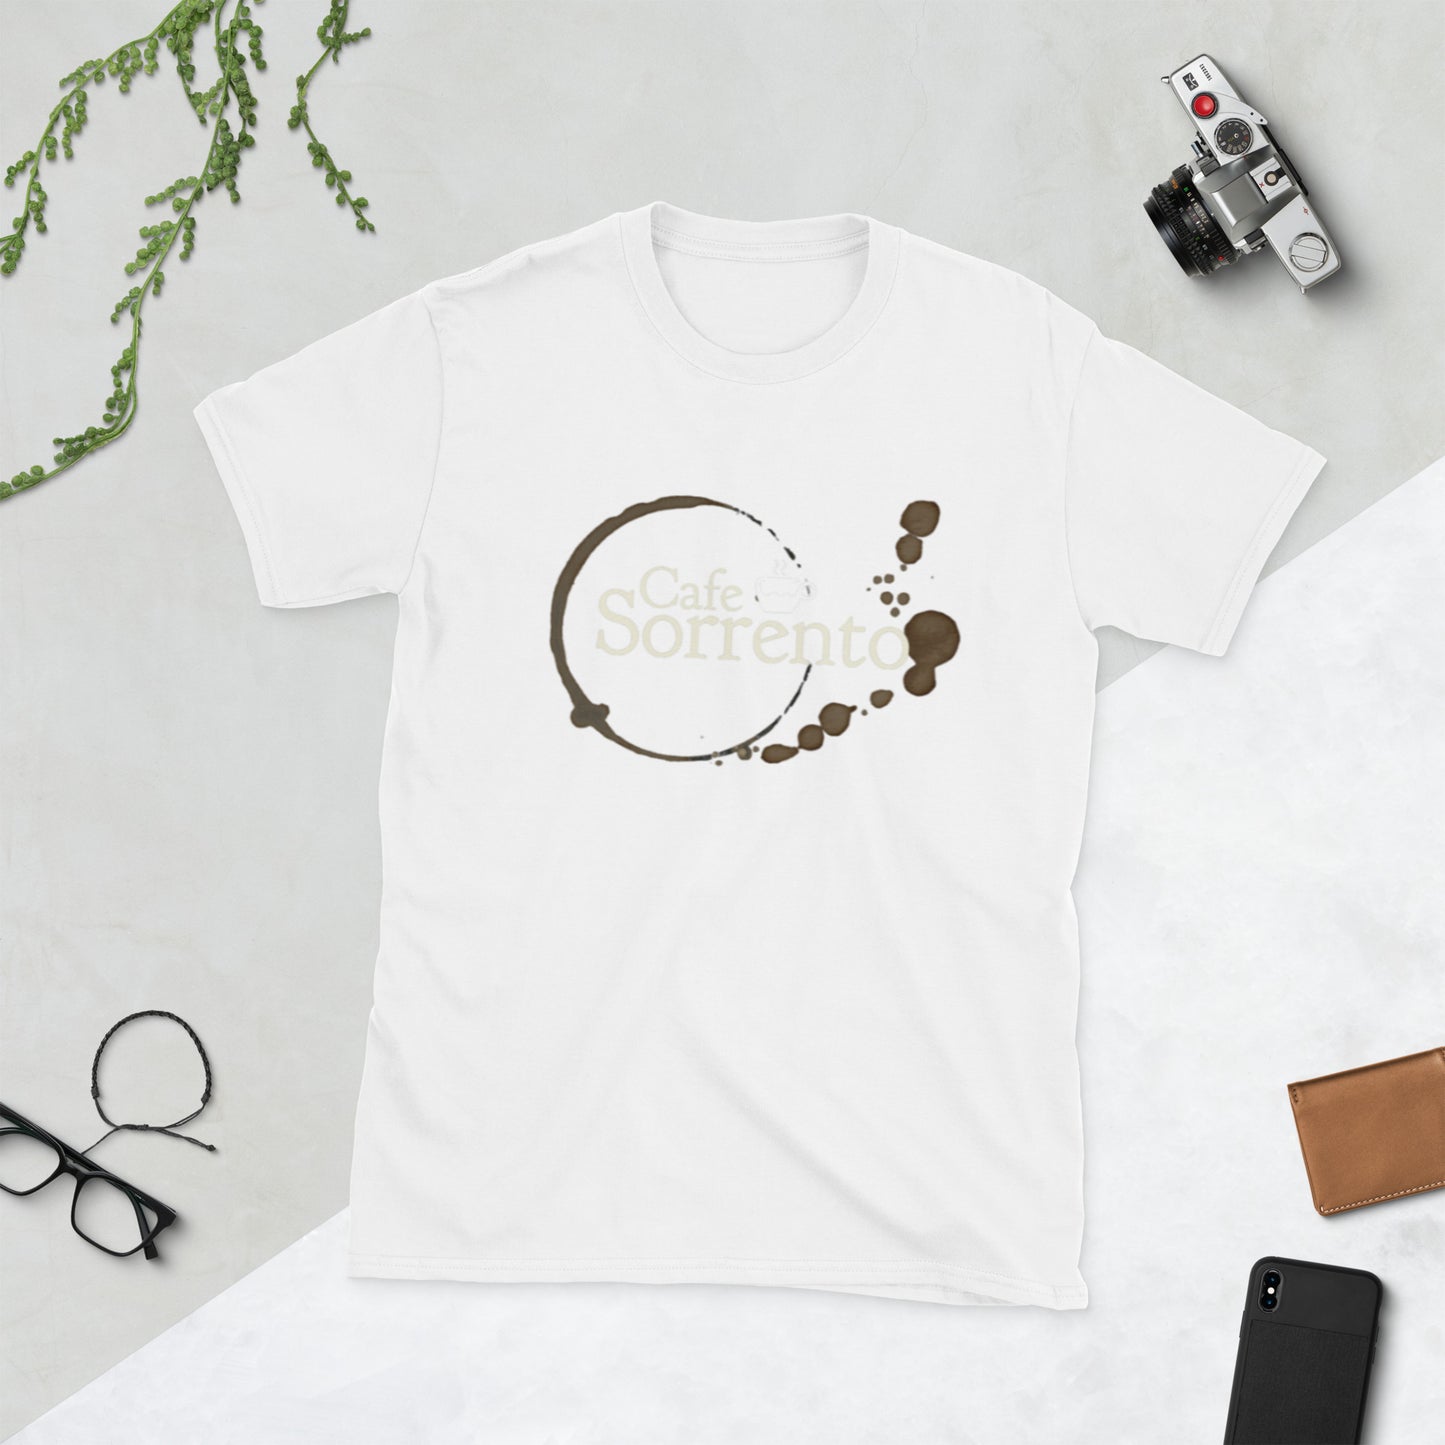 "Cafe Sorrento" unisex t-paita (logo isolla rinnassa)